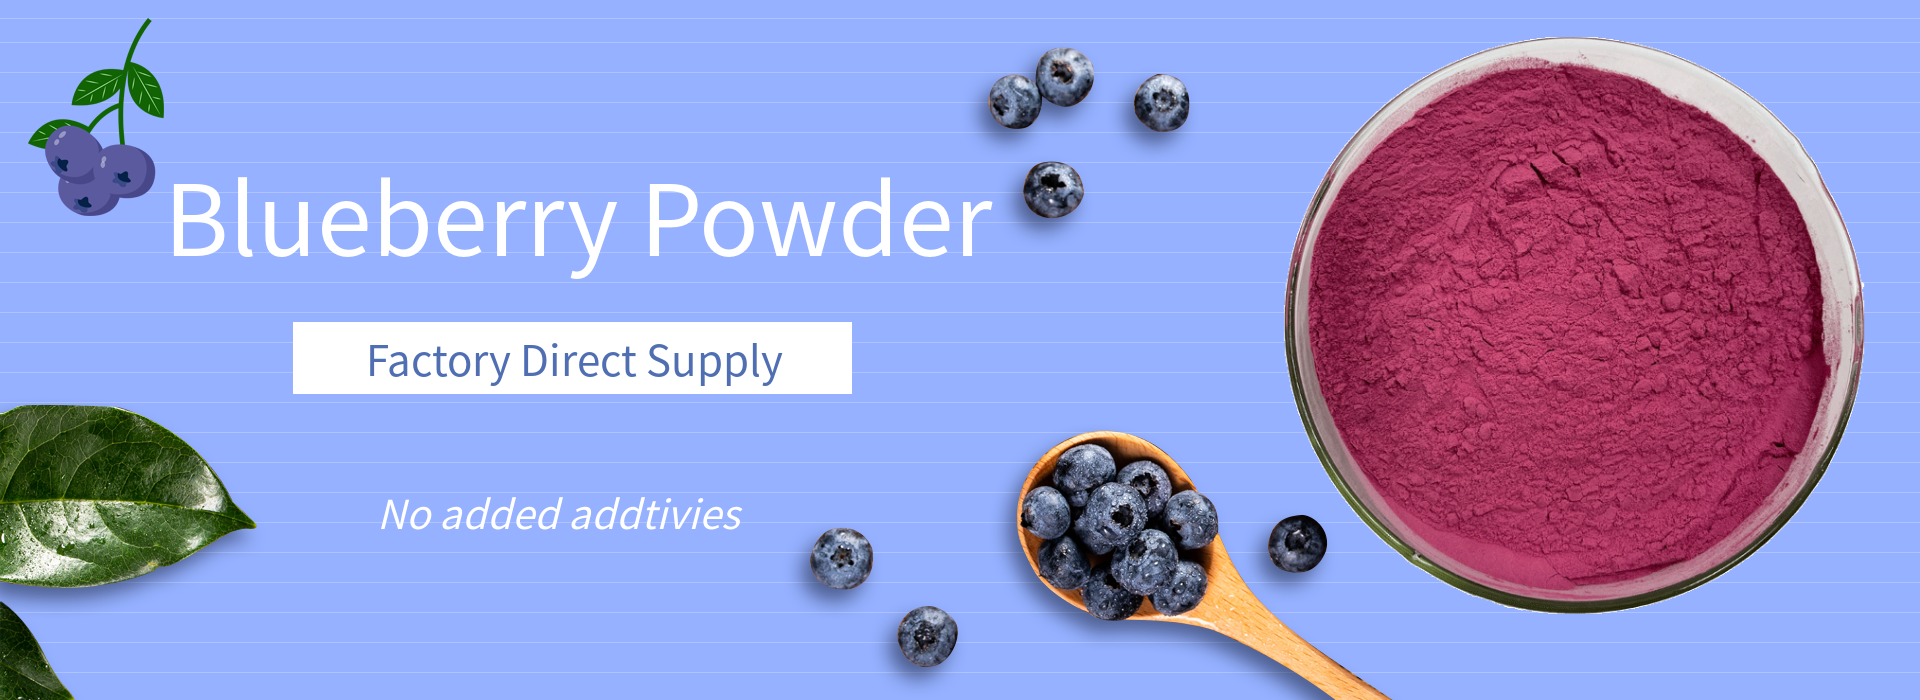 Blueberry Powder (2)